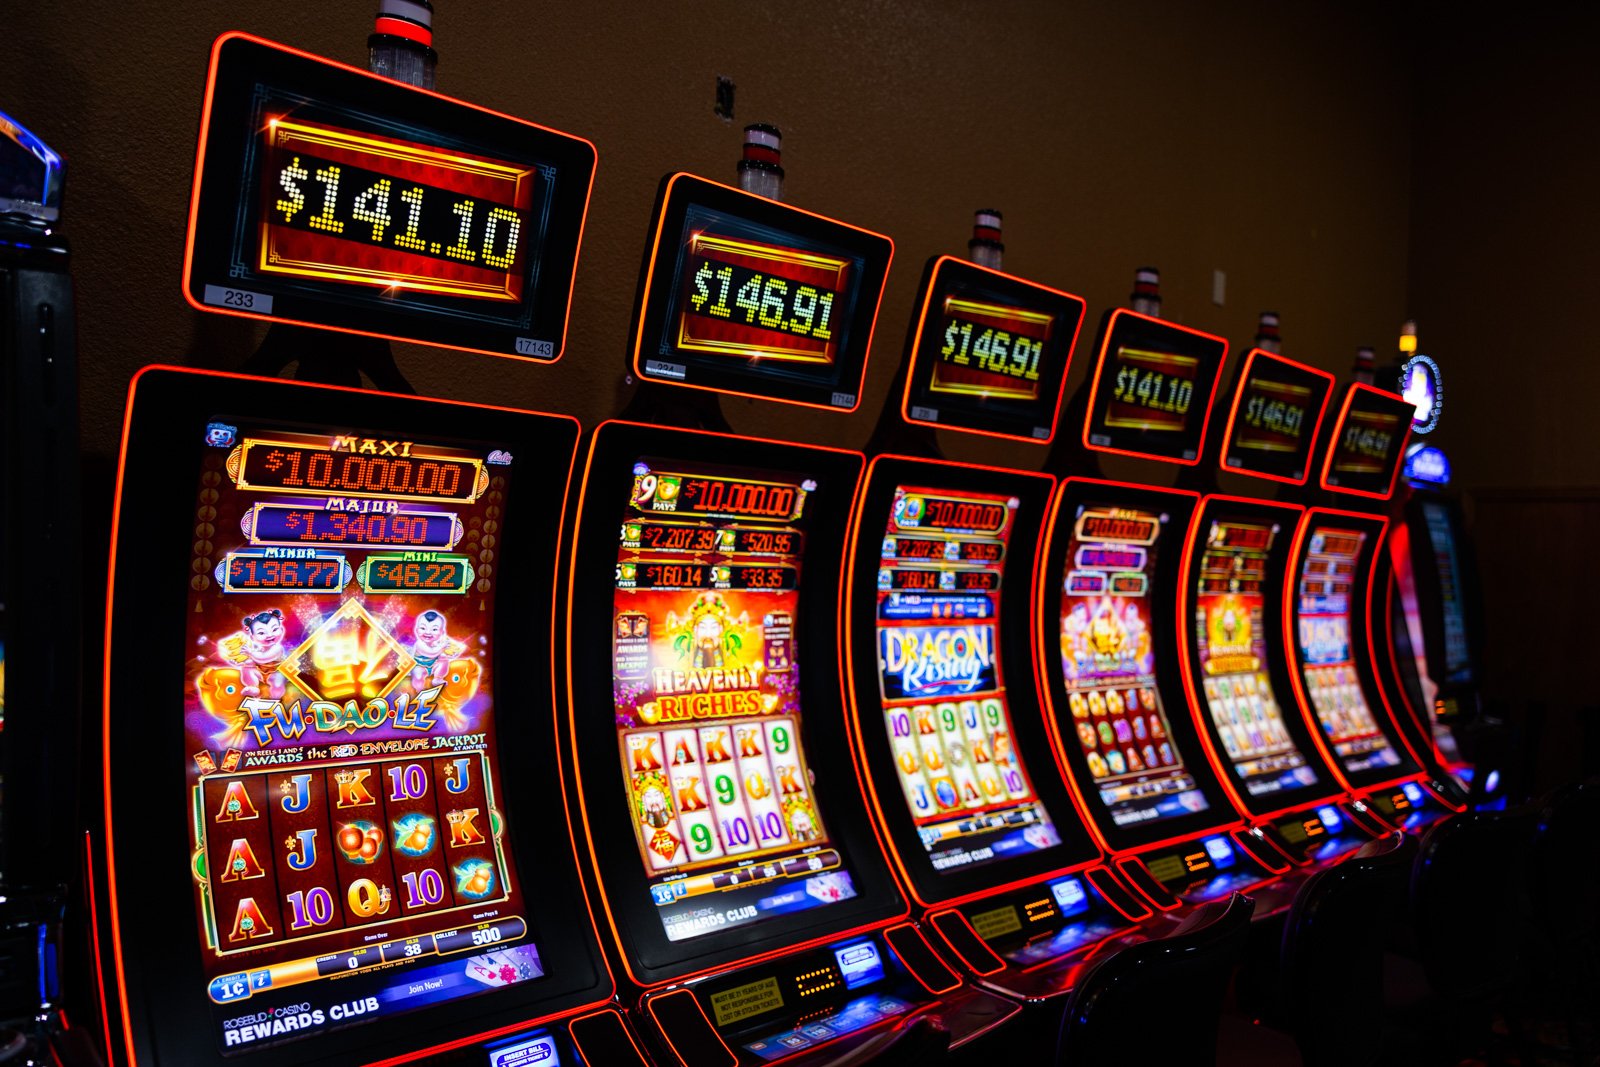 rosebud-casino-gaming-floor-slot-machines-near-valentine-nebraska-1.jpg